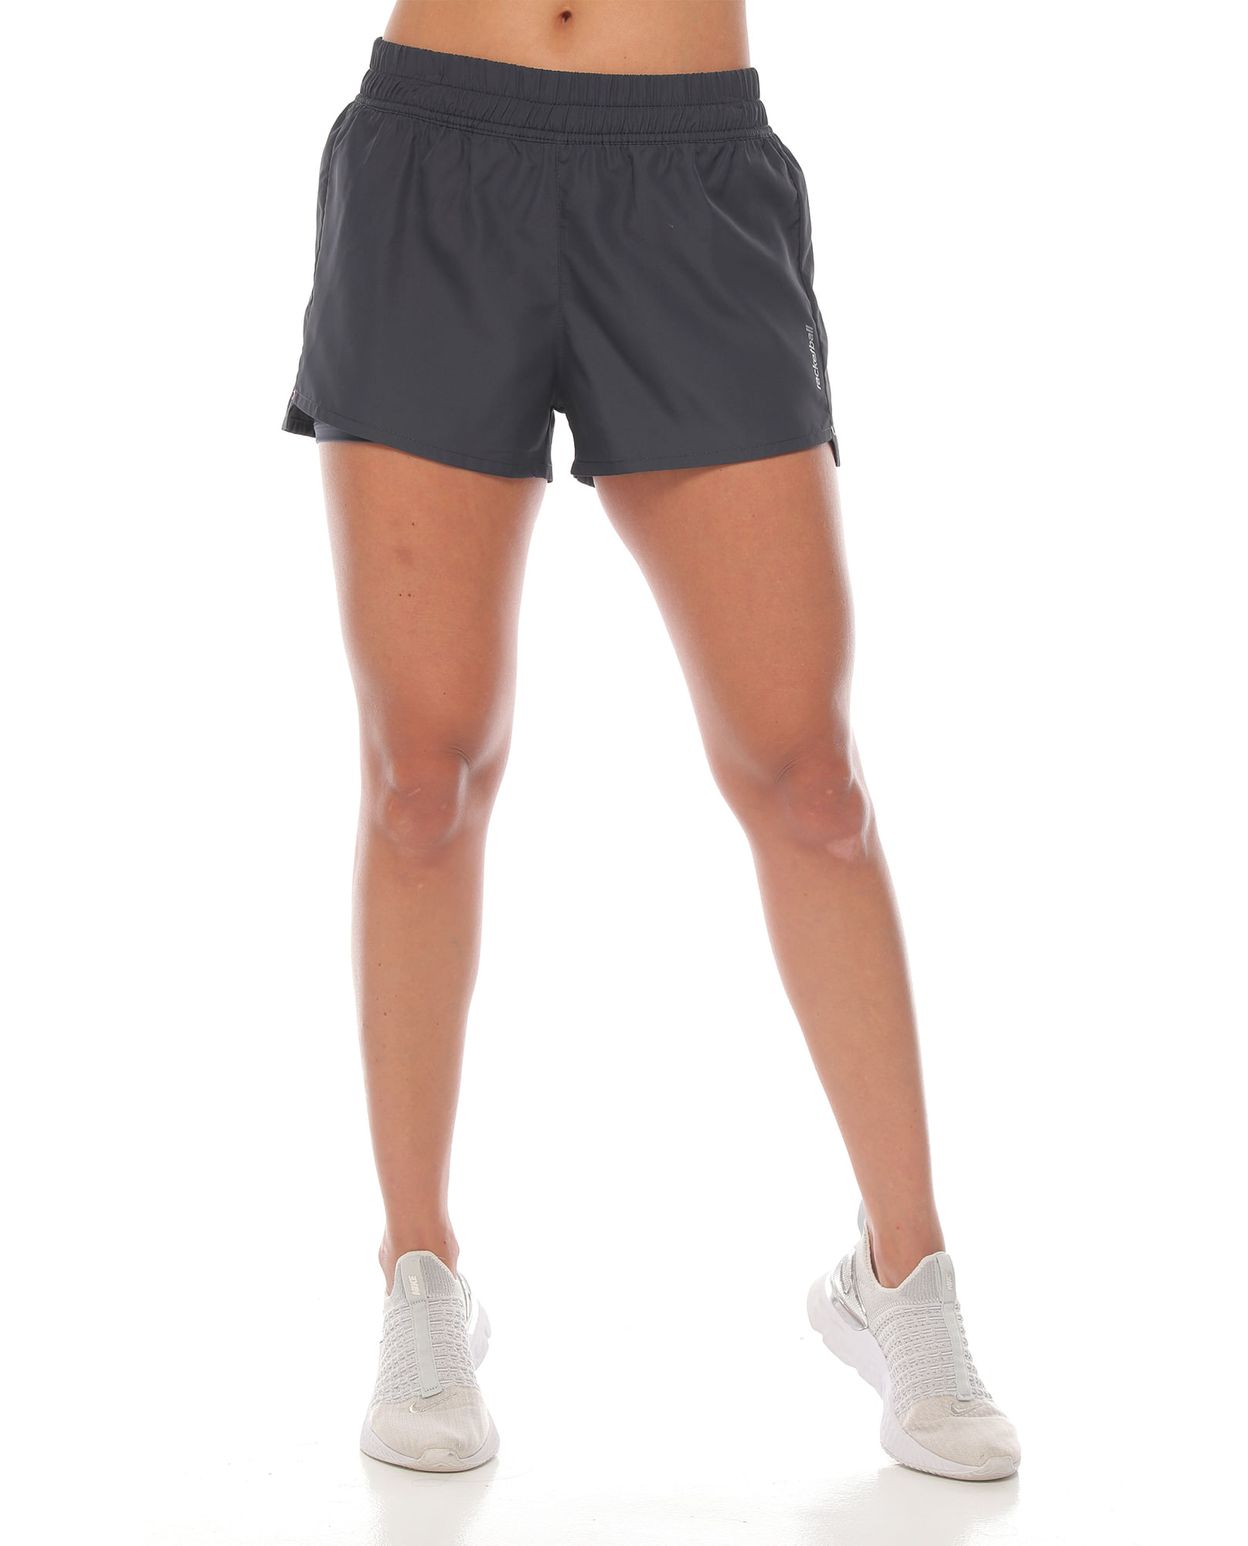 pantaloneta running deportiva color gris con fit interior para mujer